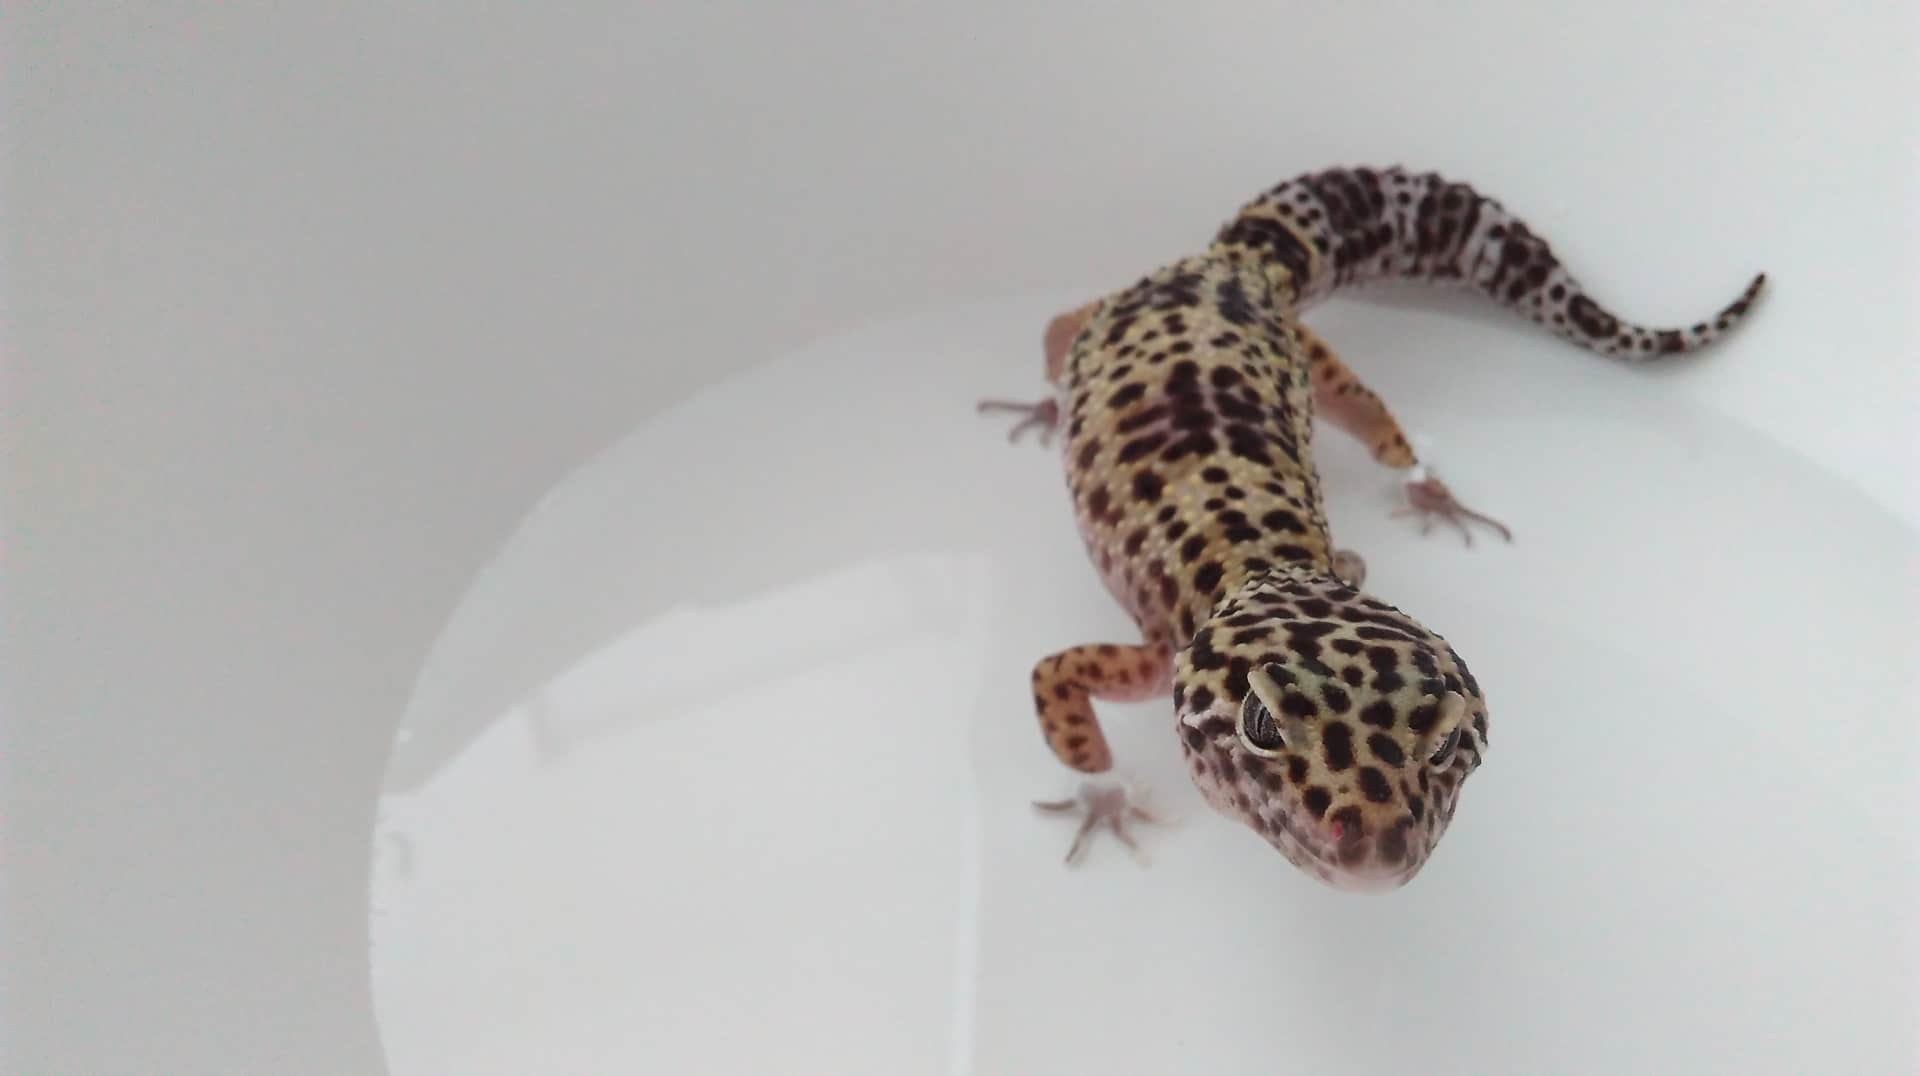 Leopard gecko taking a warm bath